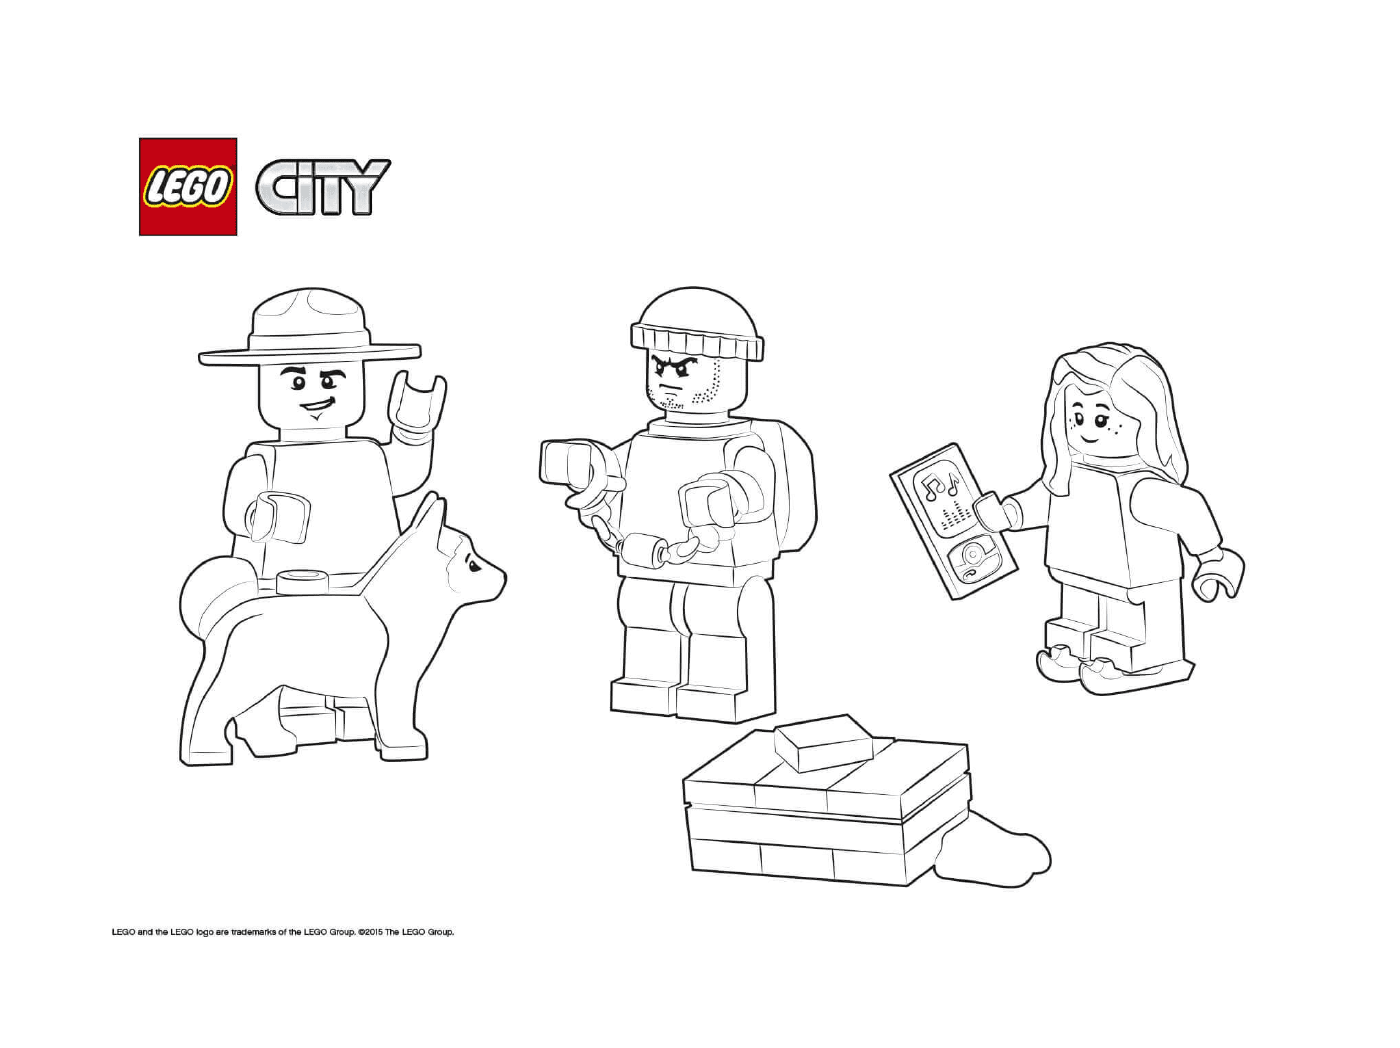  Cherif Lego City y prisionero 